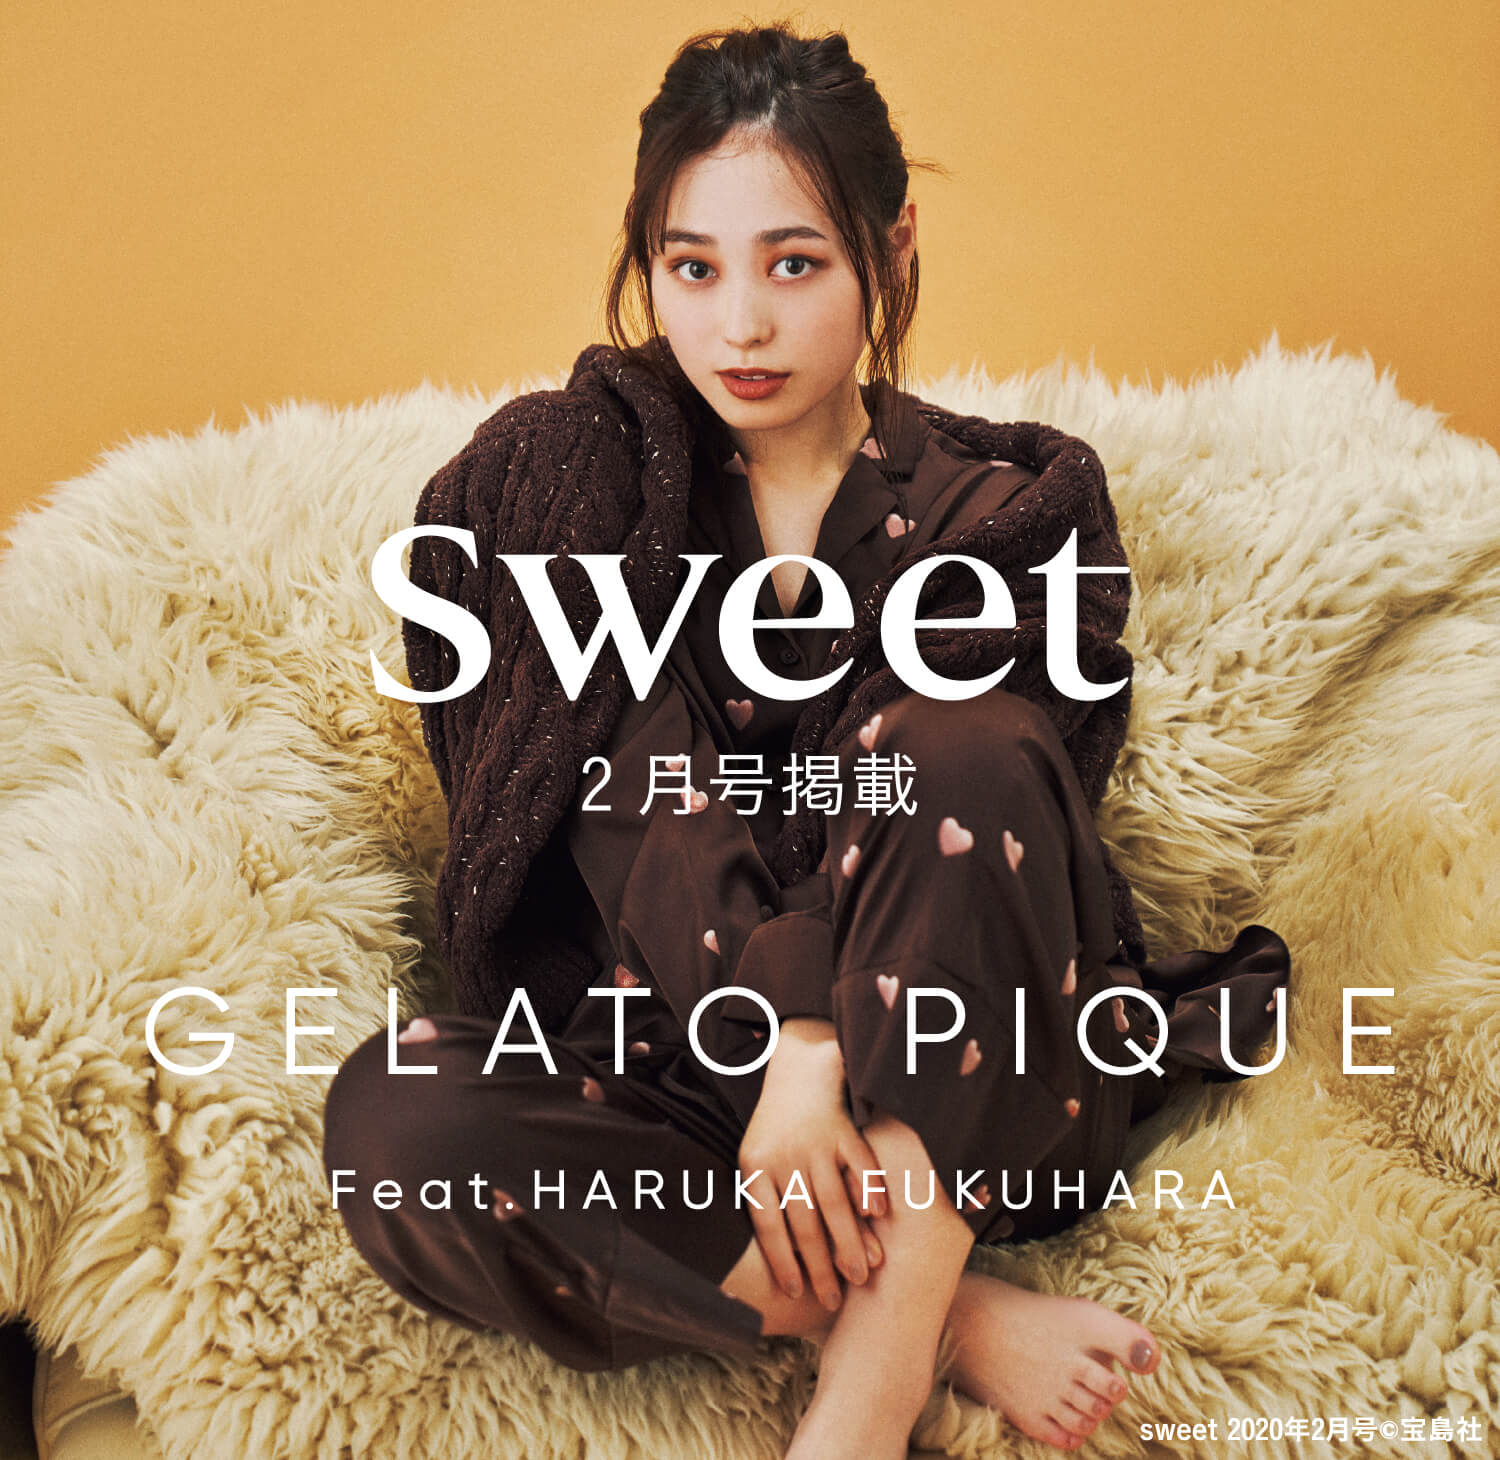 Sweet 2月号掲載 GELATO PIQUE Feat.HARUKA FUKUHARA